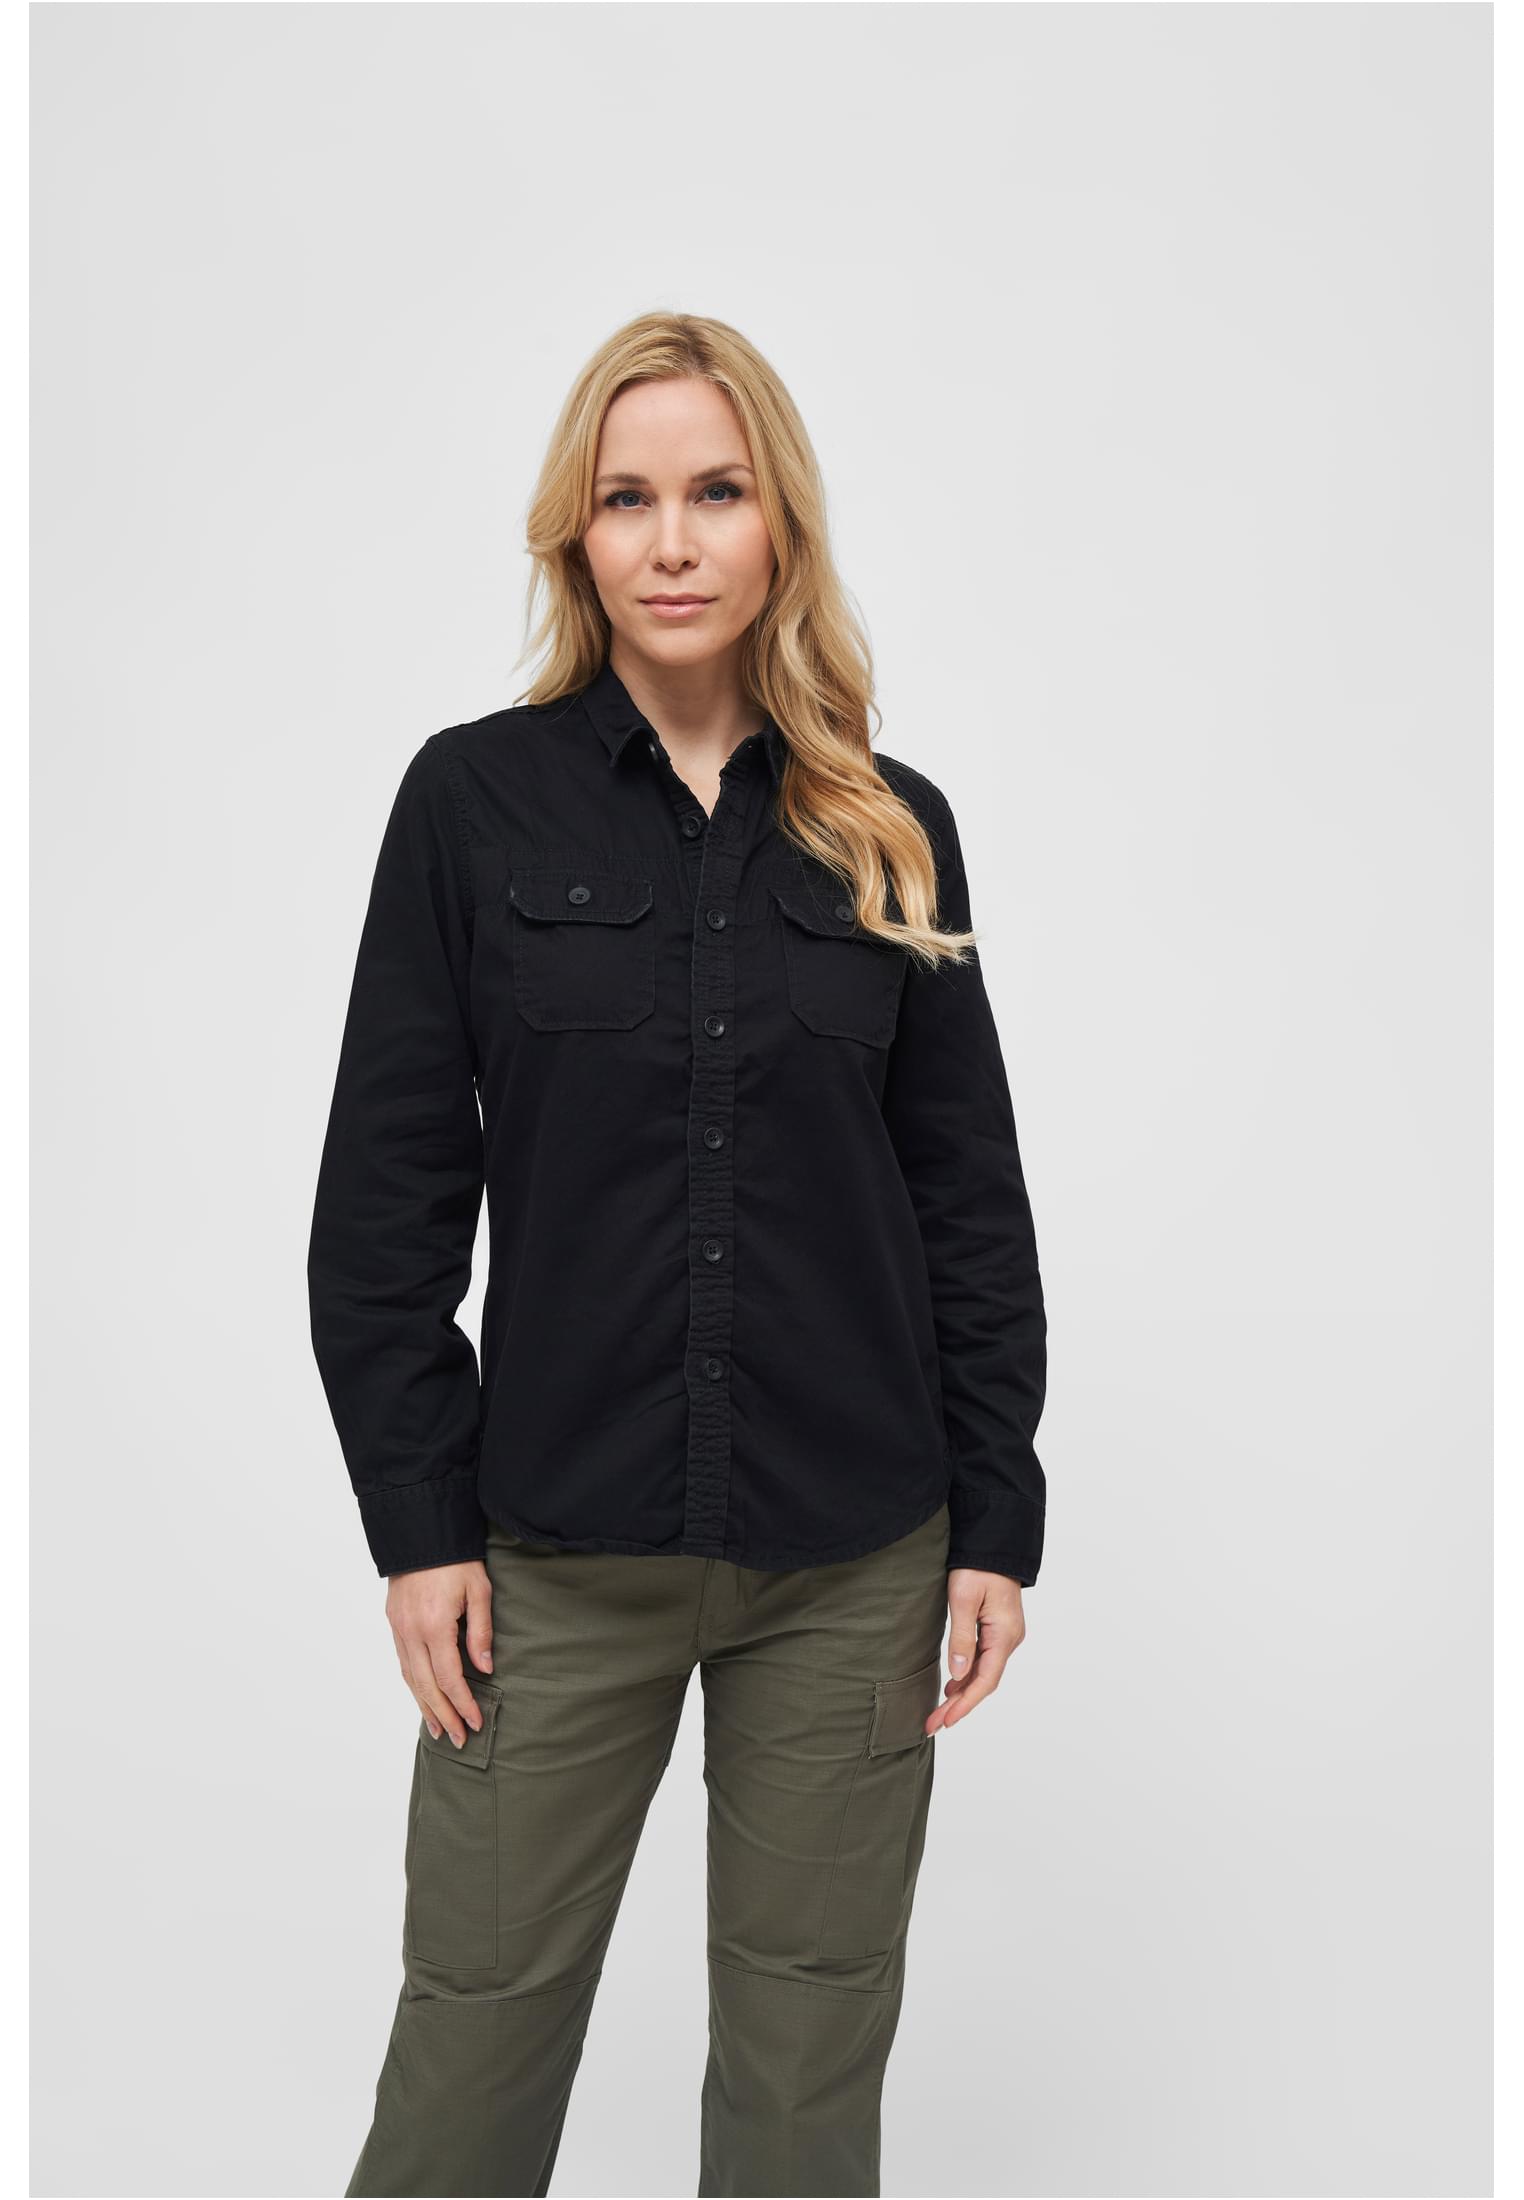 Women's vintage long sleeve shirt black